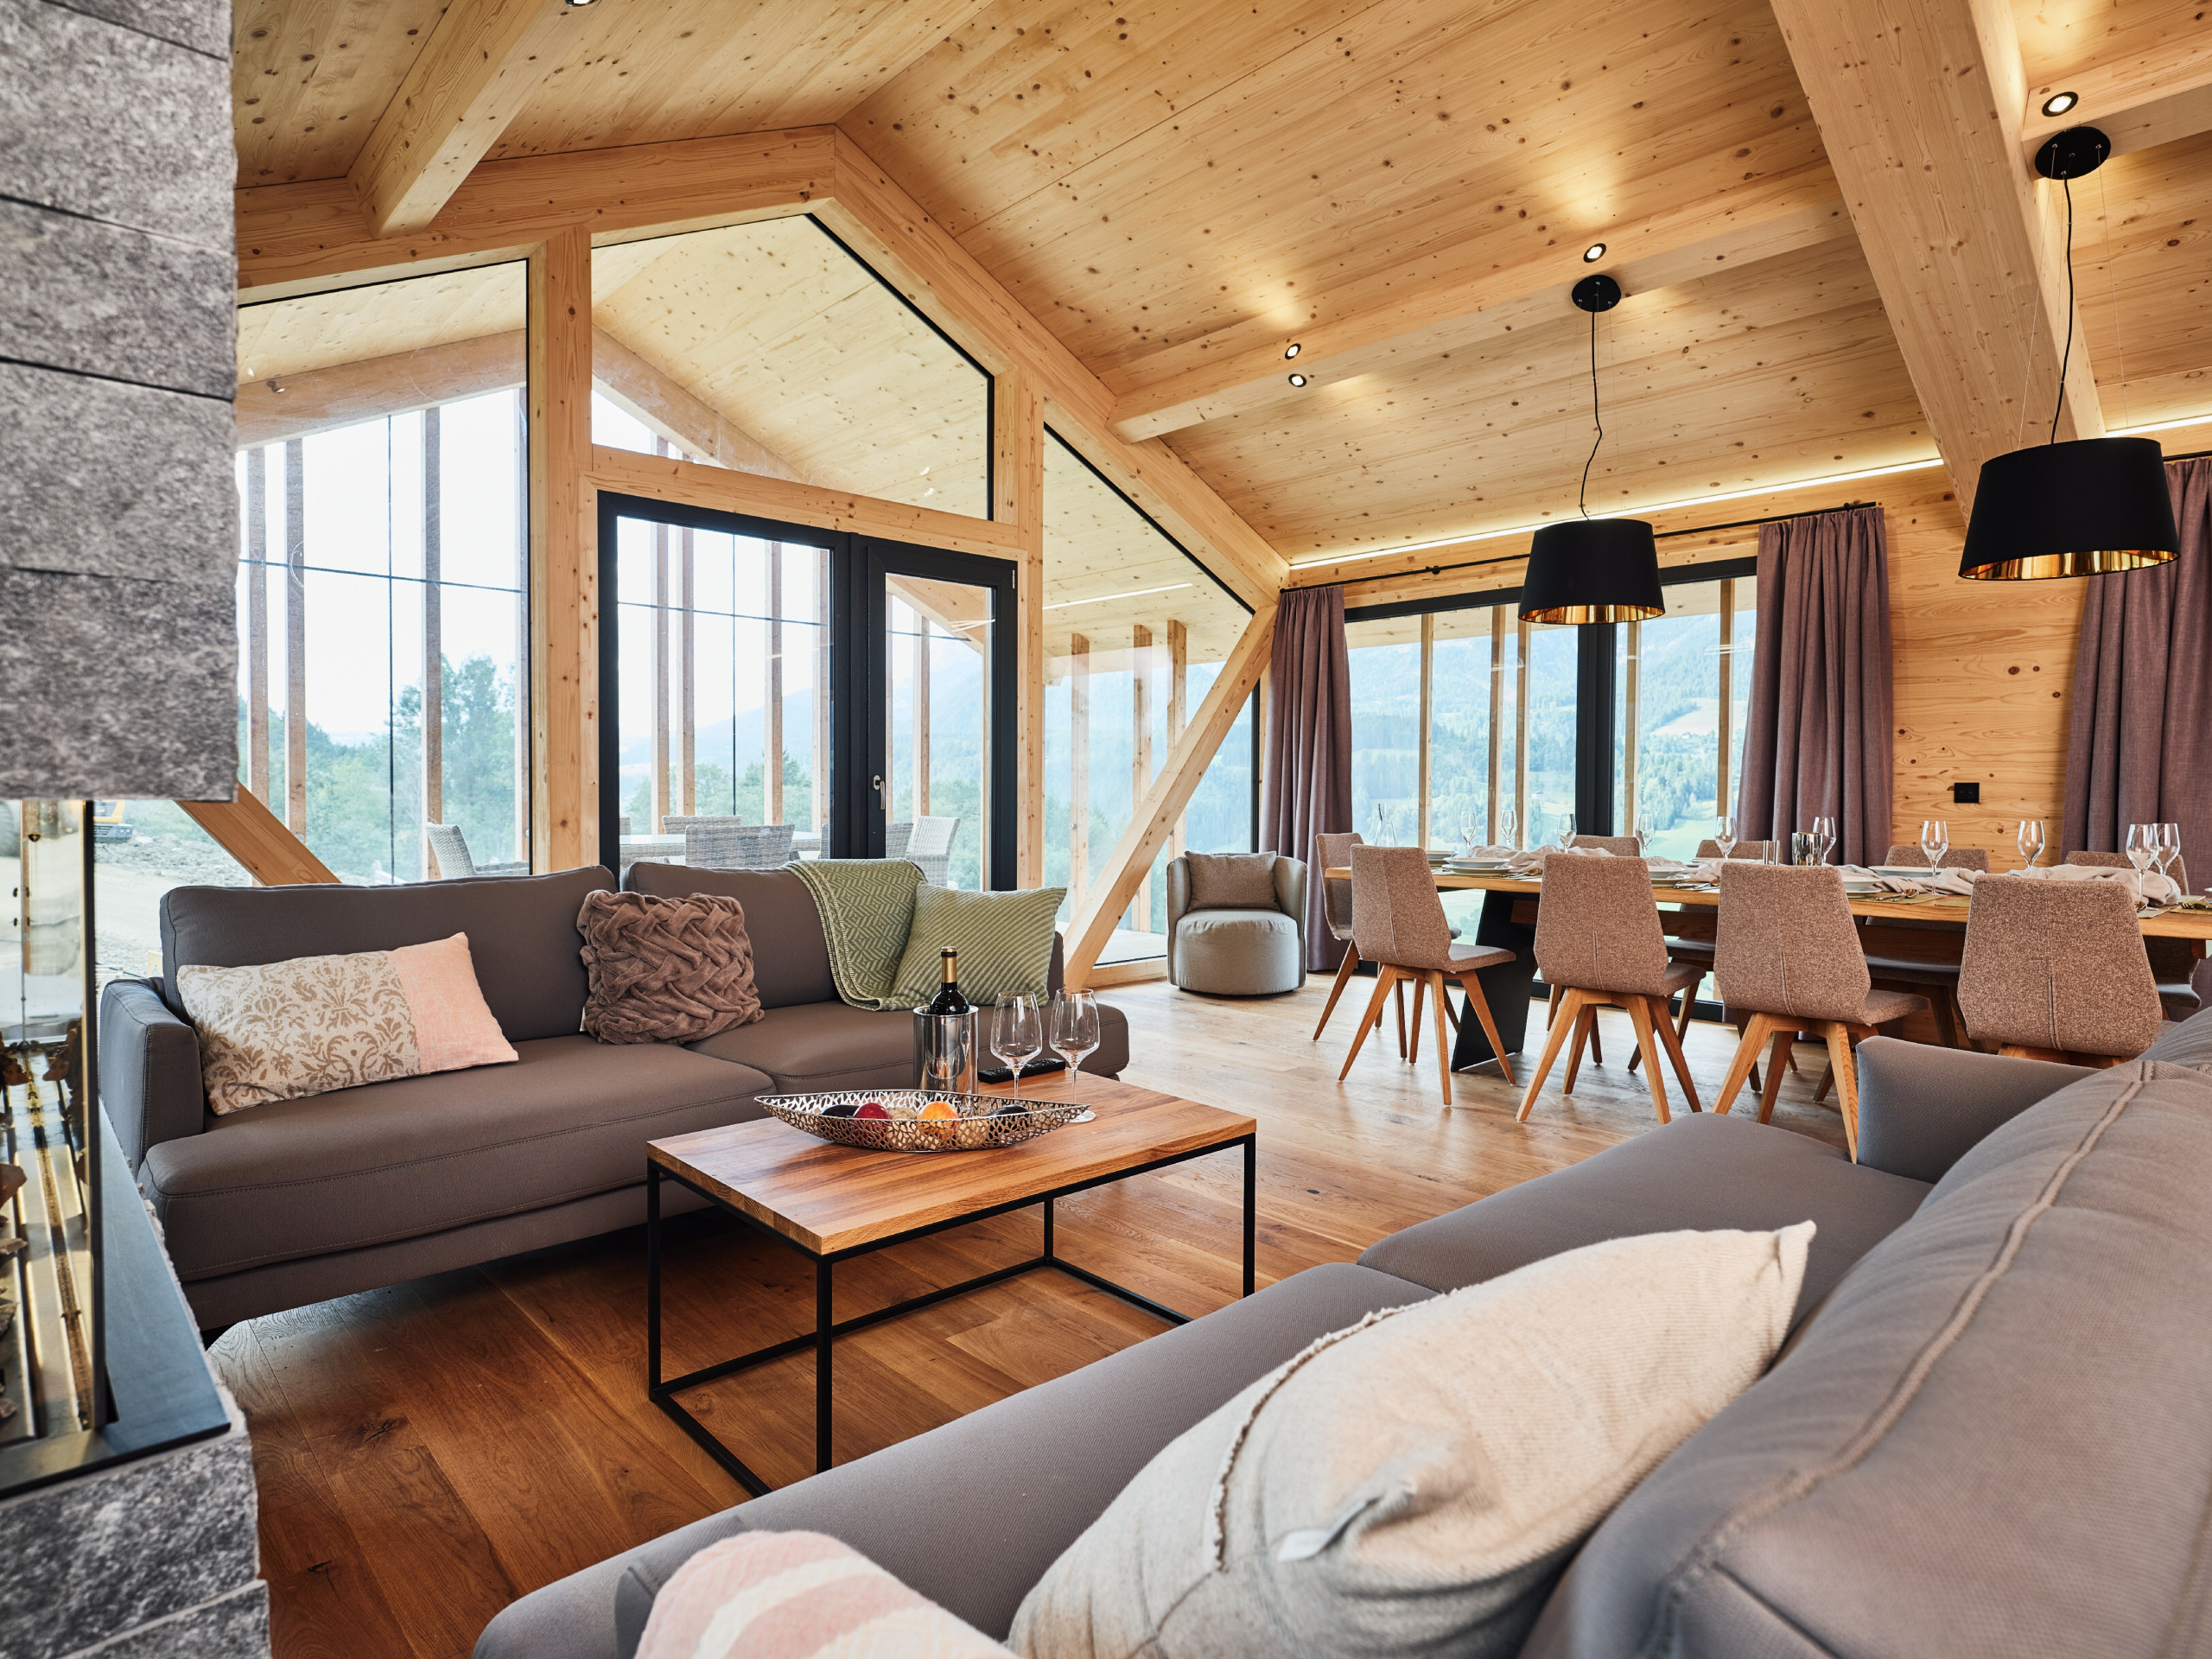  in Haus im Ennstal - Premium Chalet with 5 bedrooms and sauna & pool